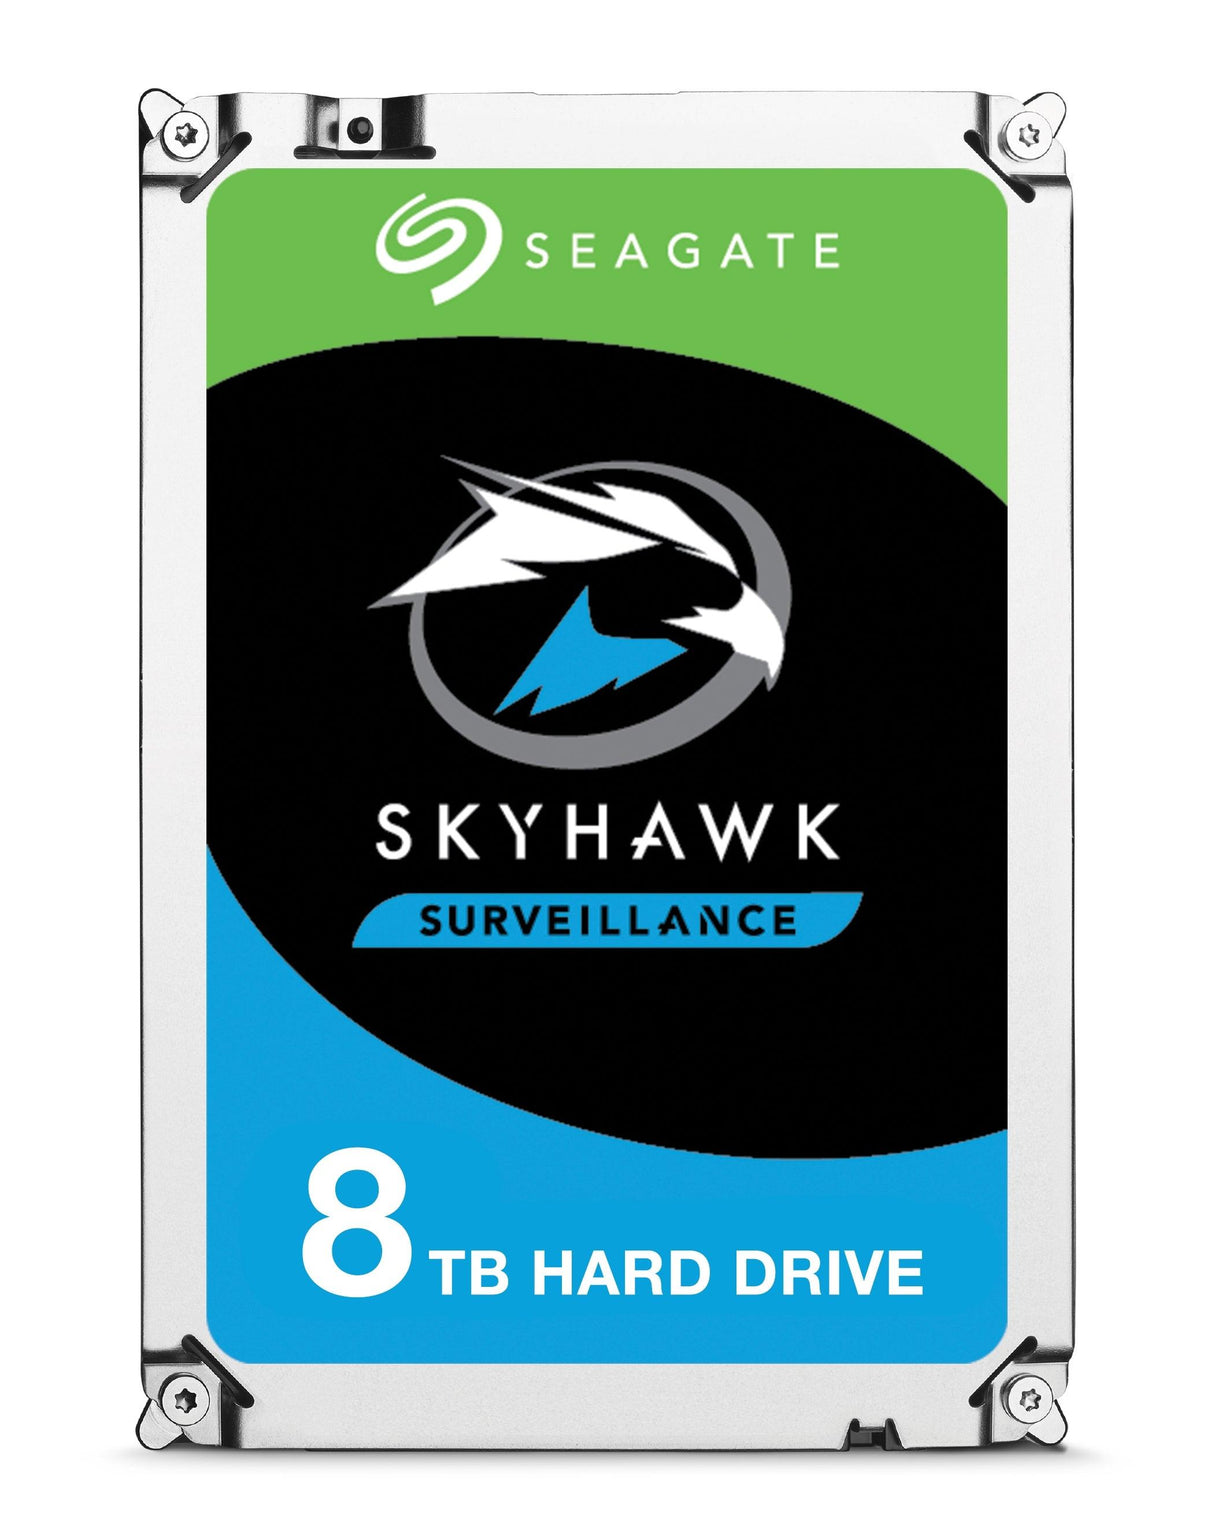 Seagate SkyHawk ST8000VX004 harddisk 3.5" 8 TB SATA - DANVIVO